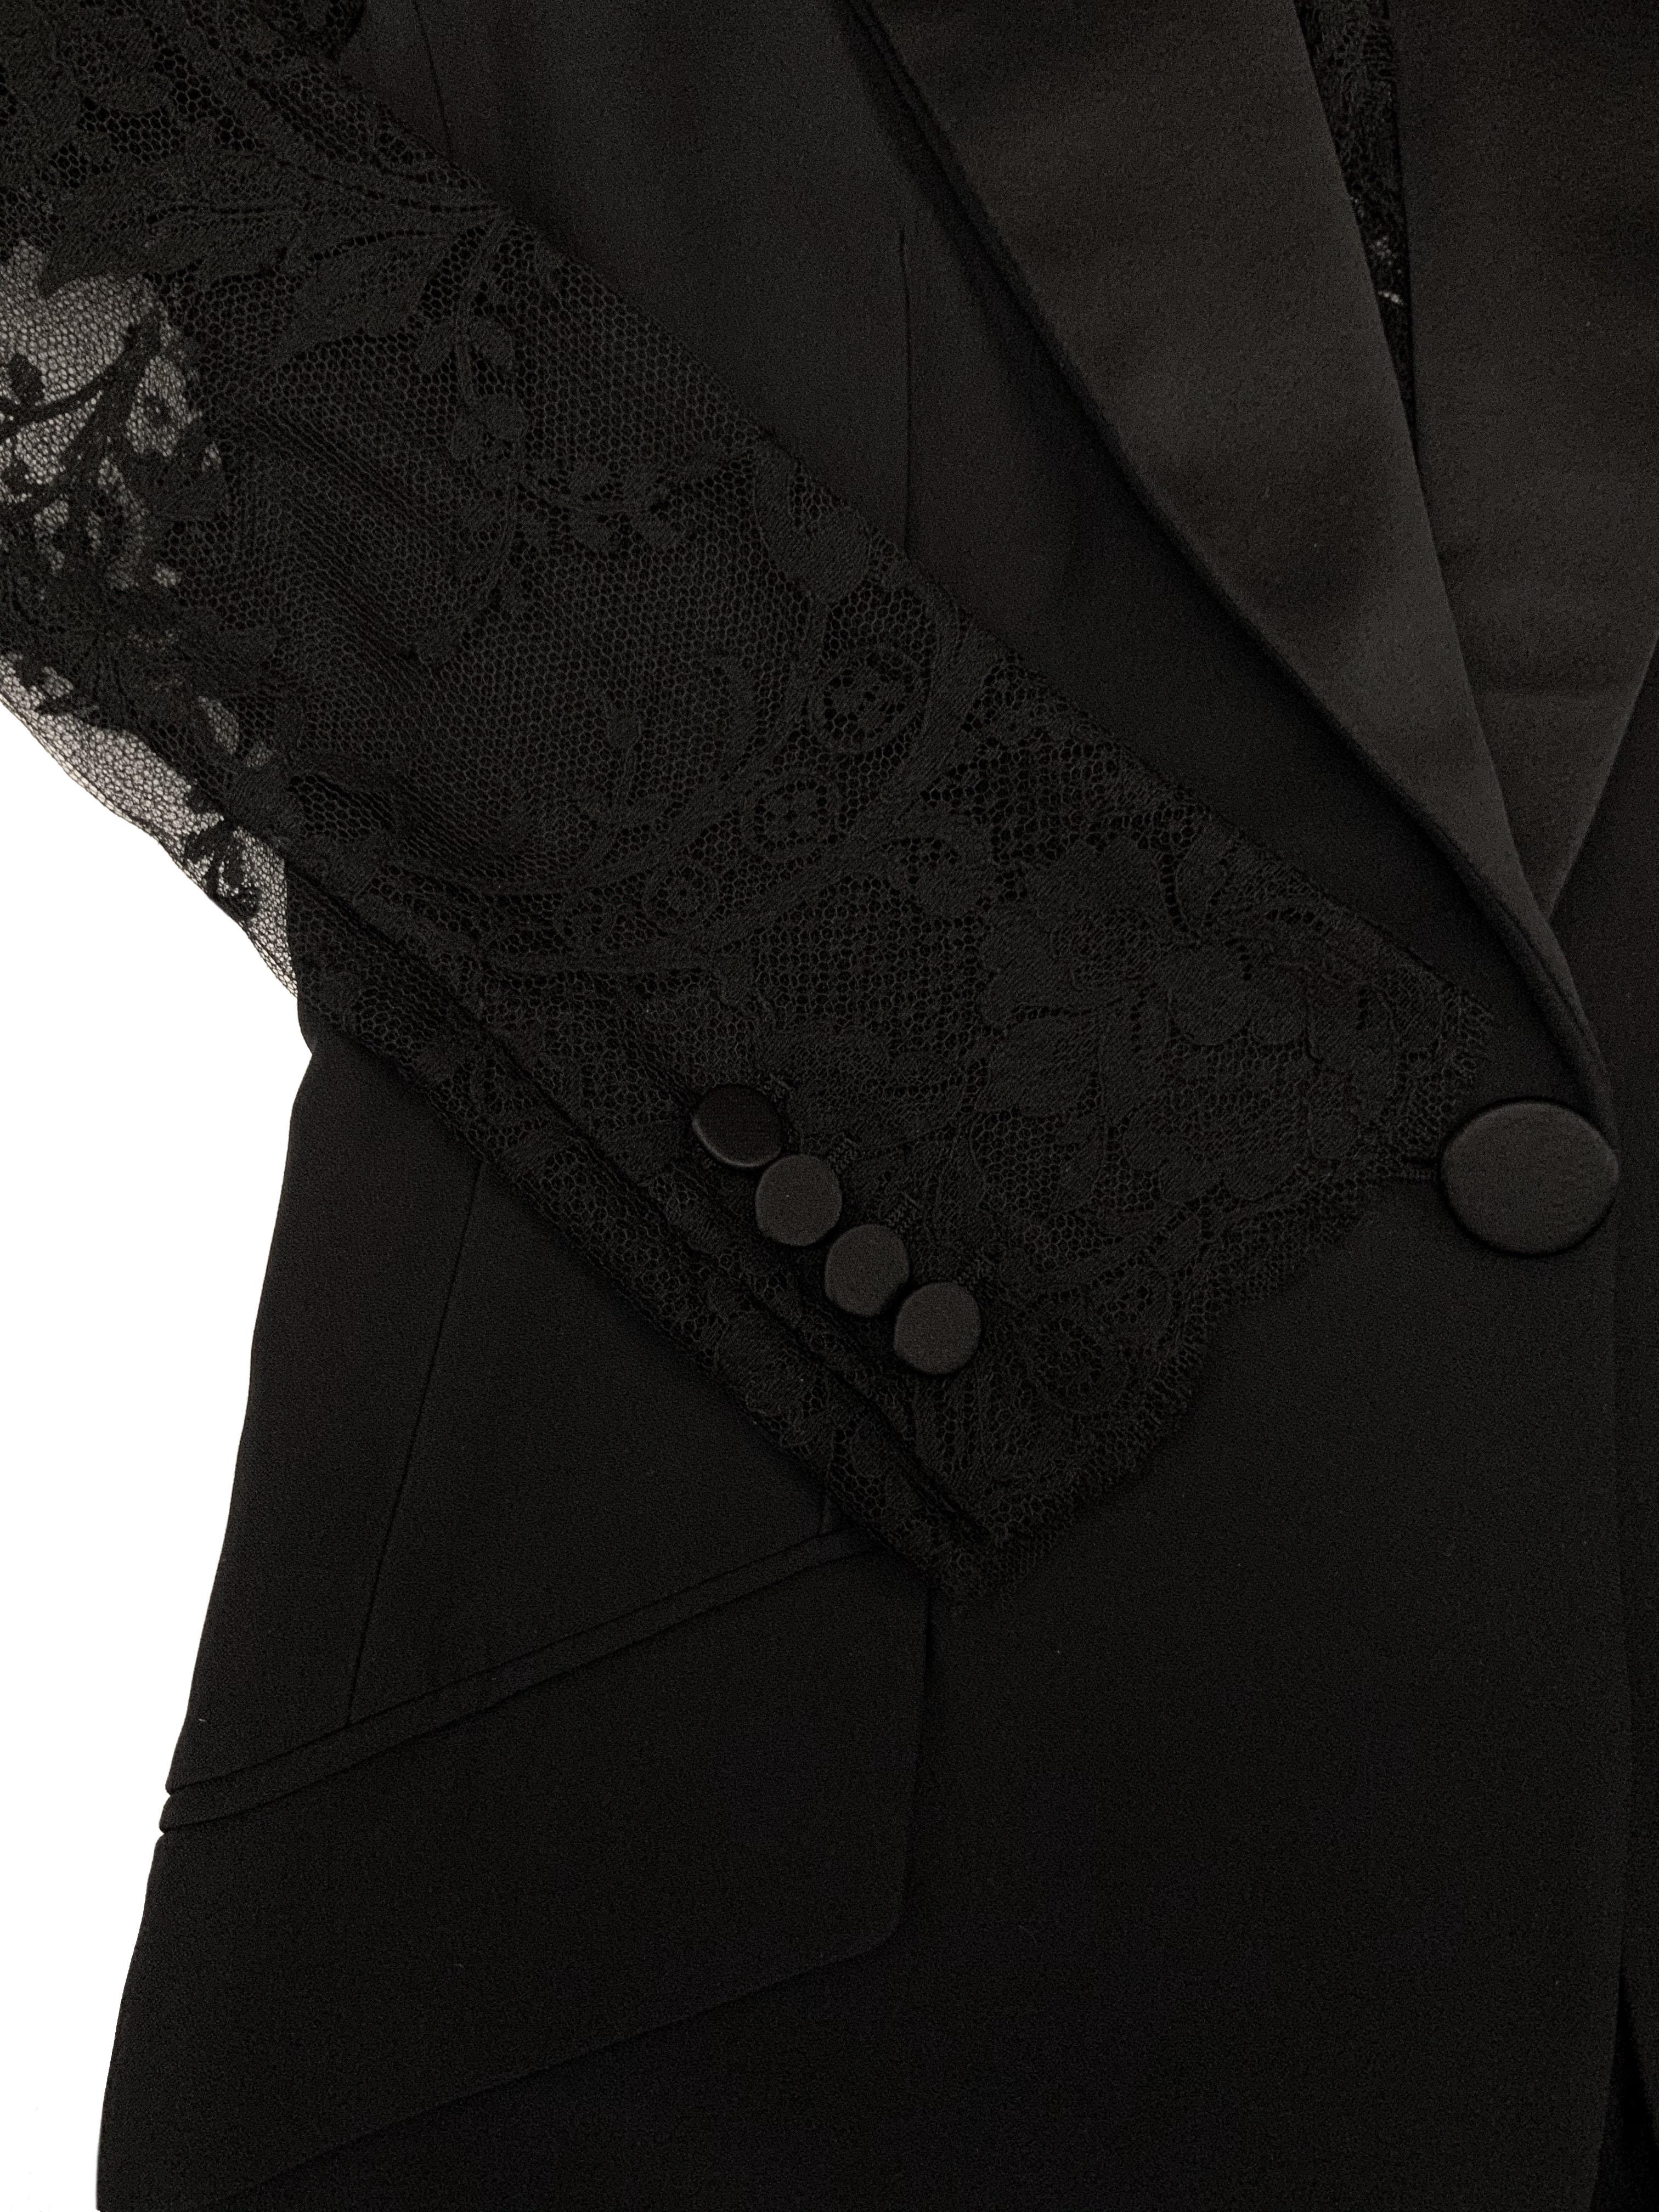 Alexander McQueen Lace Sleeve Tuxedo Black Jacket 1